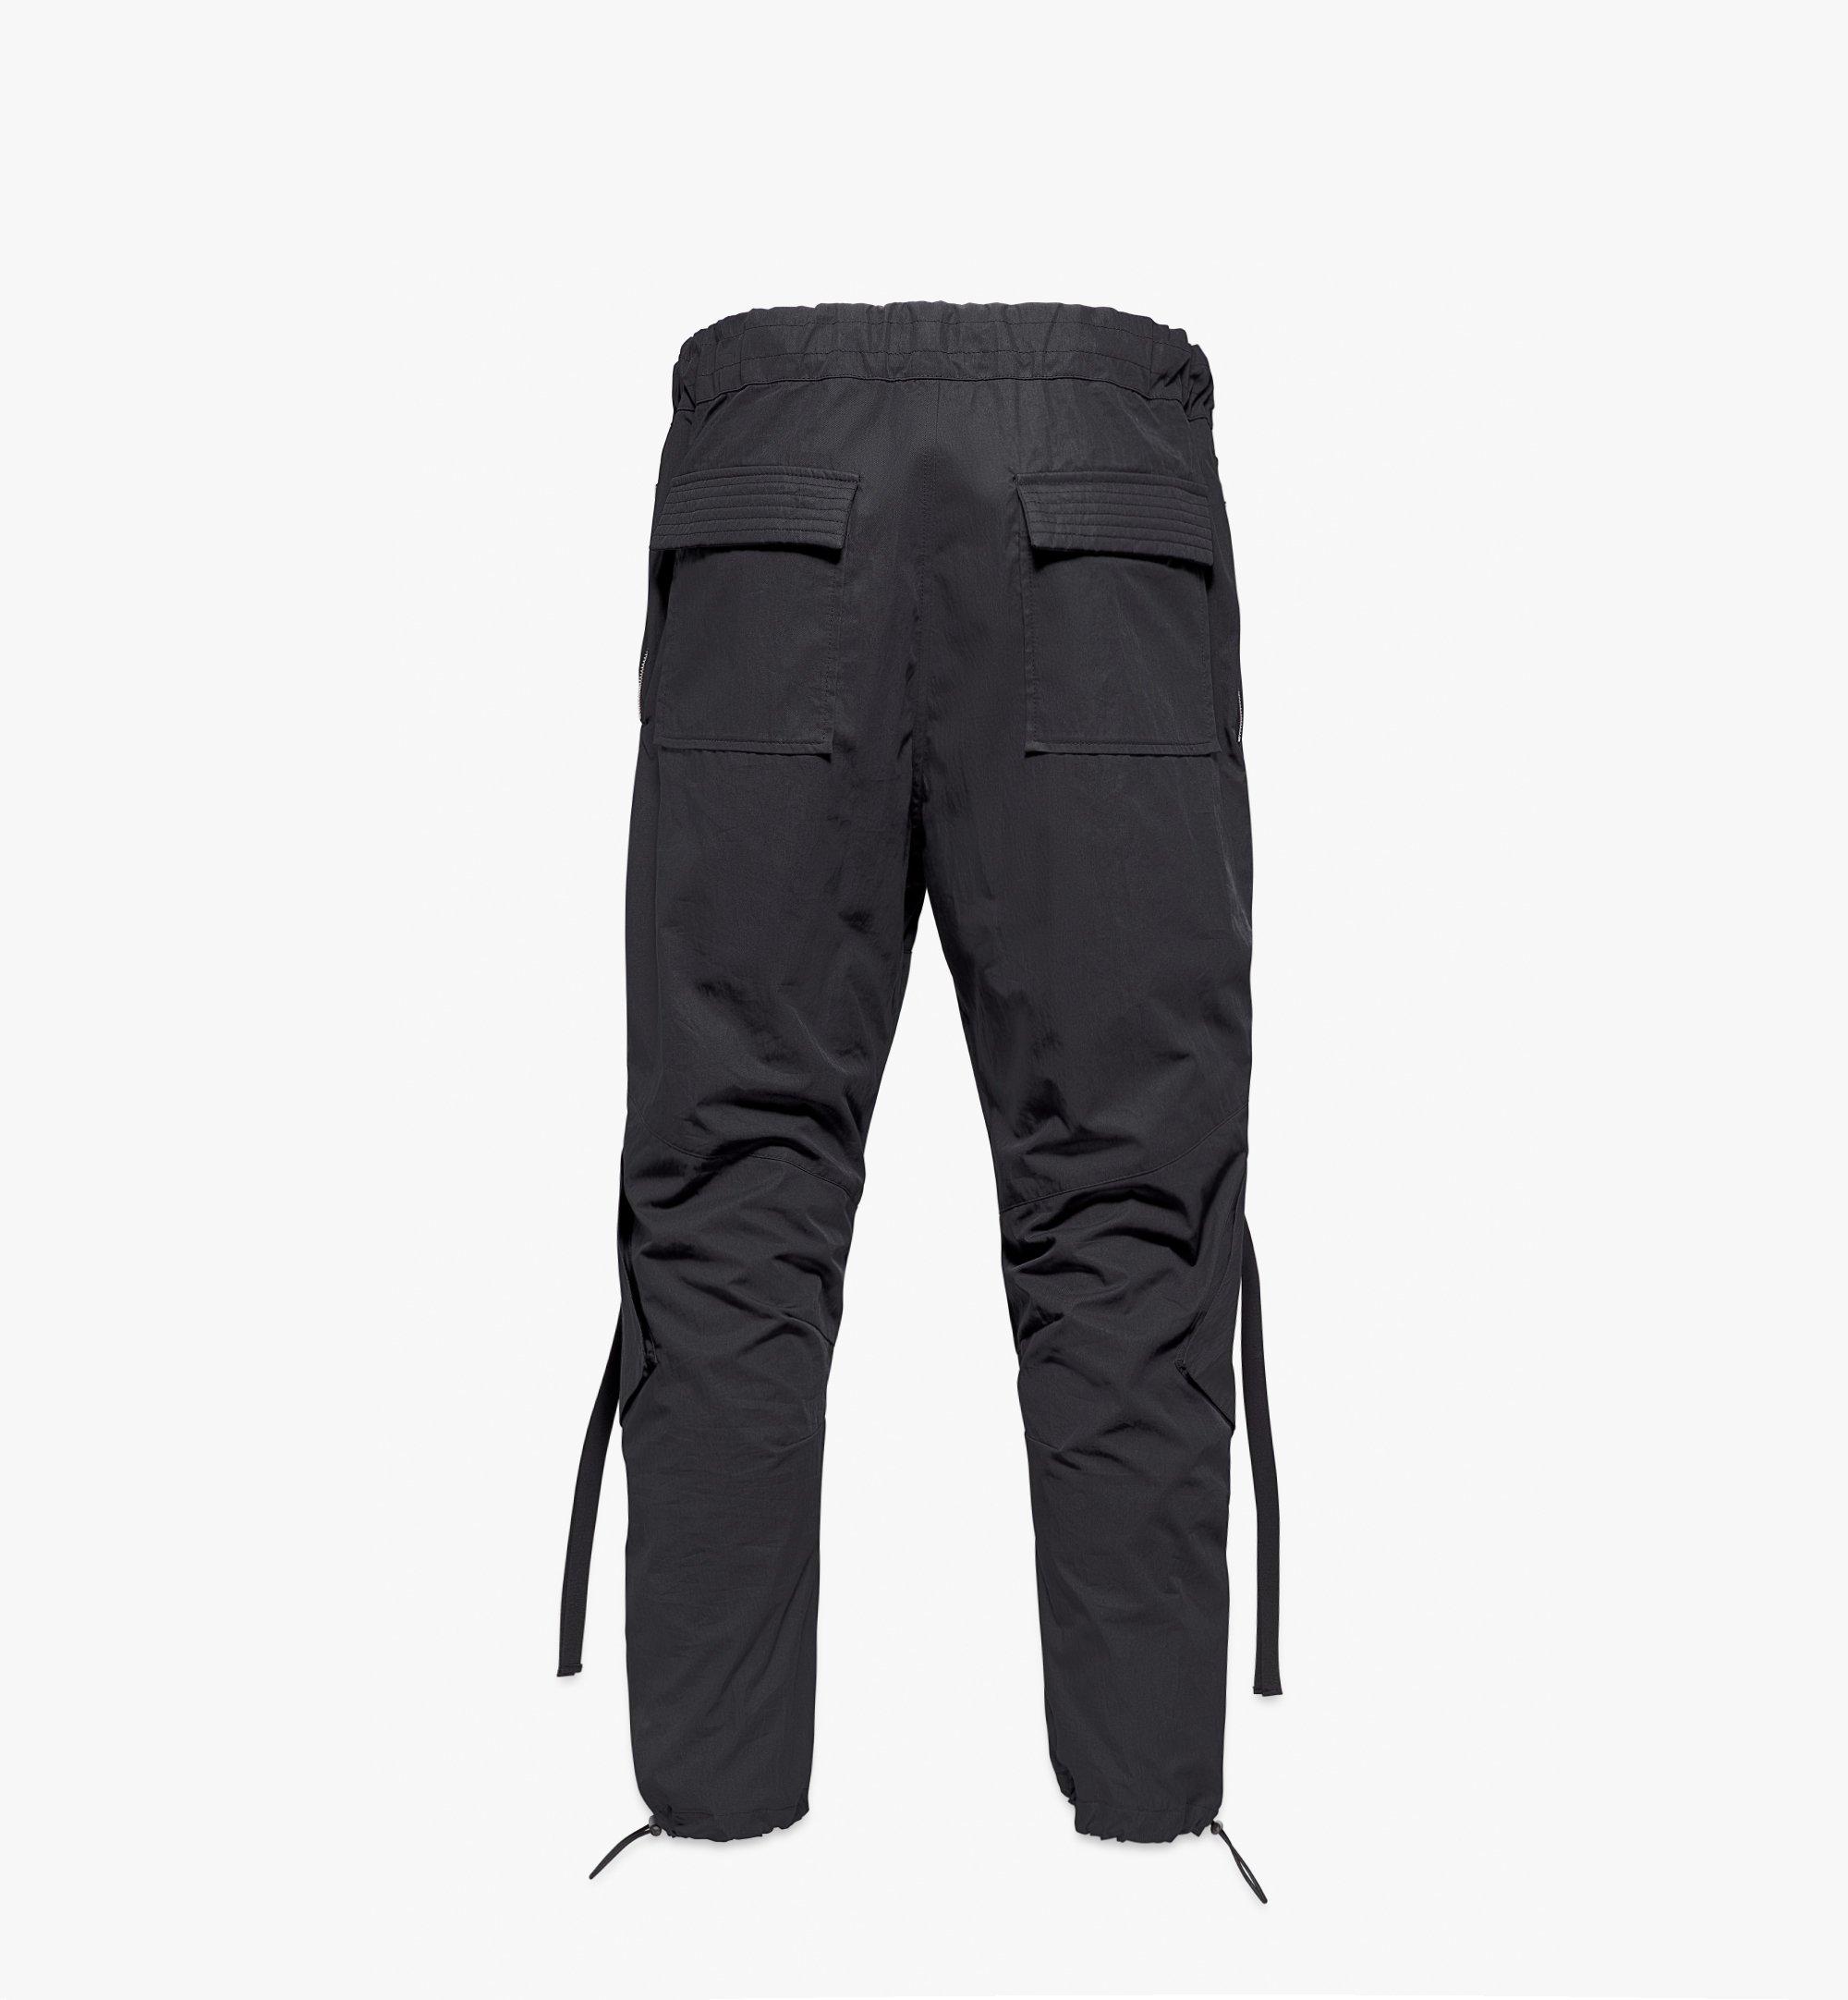 48 IT Men's Utility Cargo Pants Black 